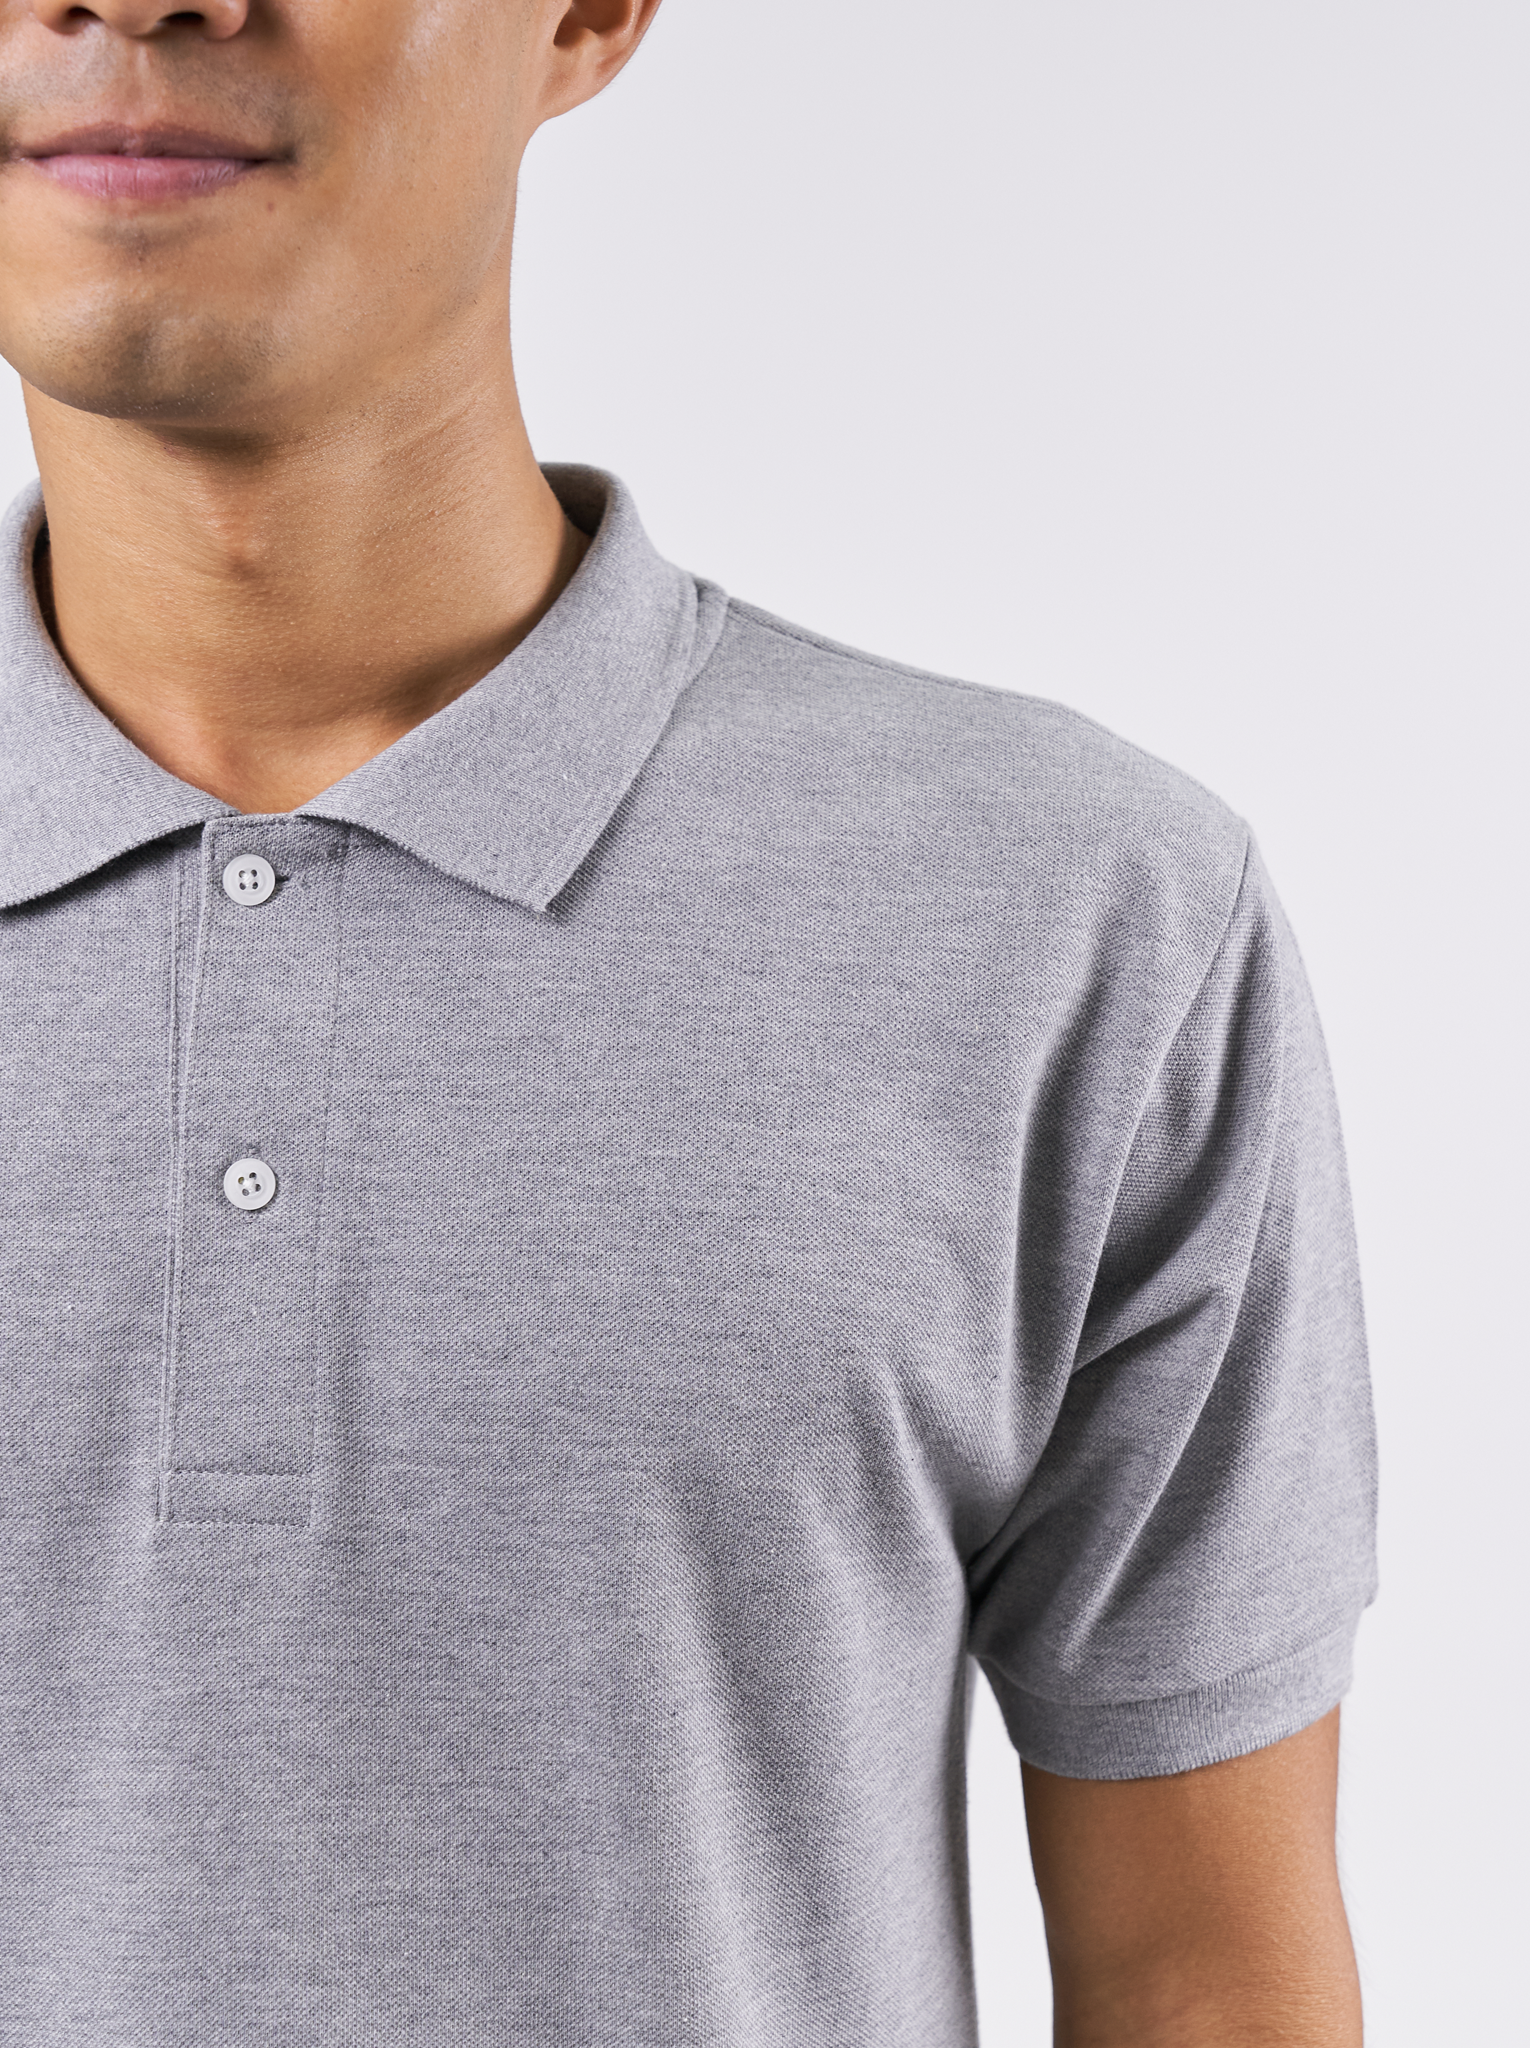 Polo Shirt เสื้อโปโล (Grey, สีเทา)(Unisex)